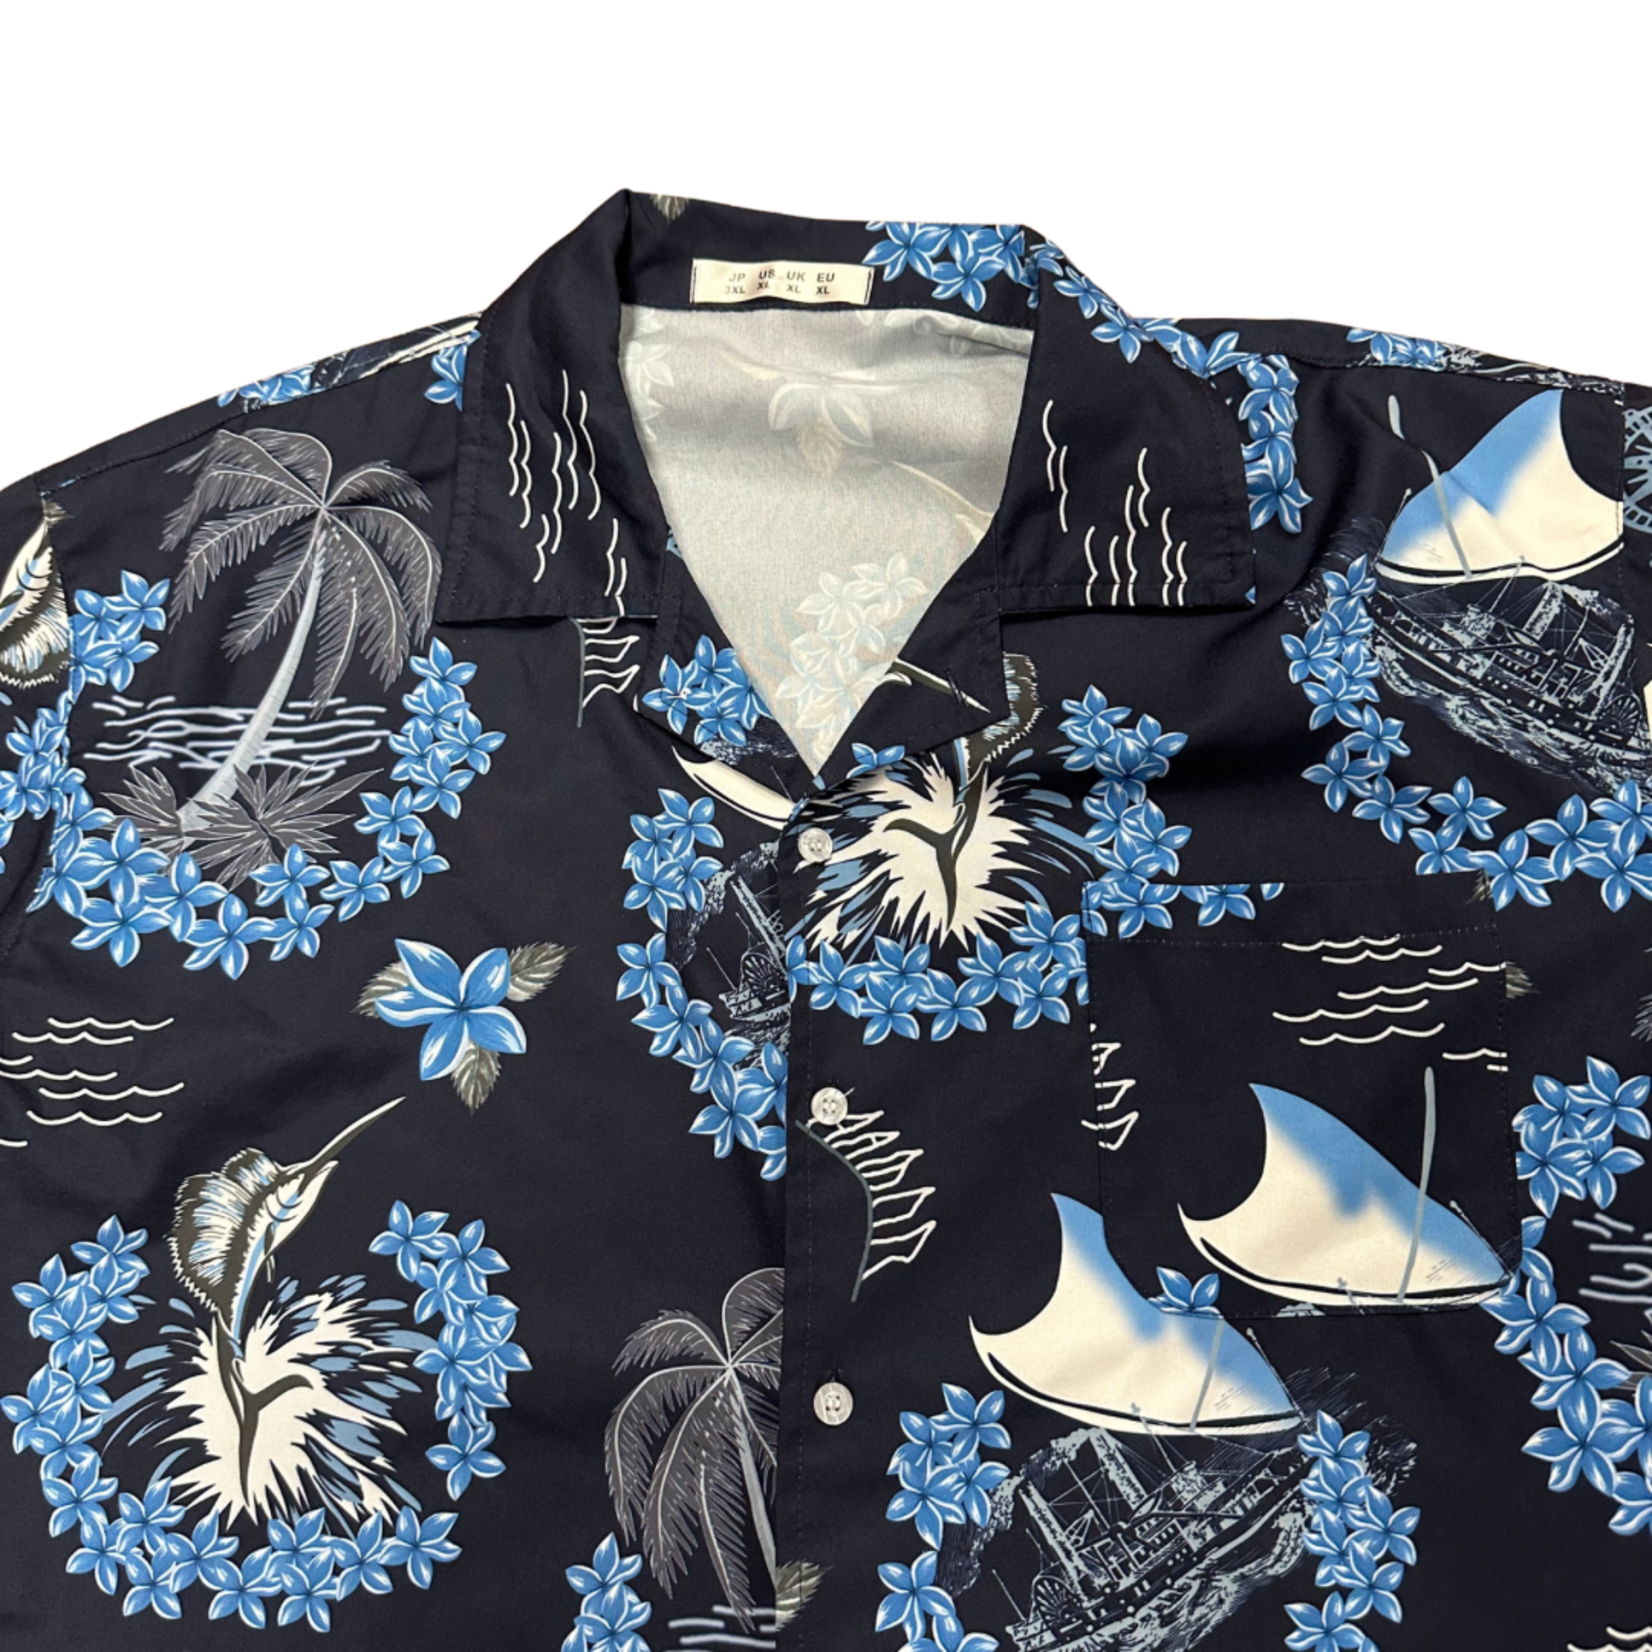 Mission Zero Men’s Reloved Aloha Shirt - XL - Unknown- Blue Marlin Lei Canoe